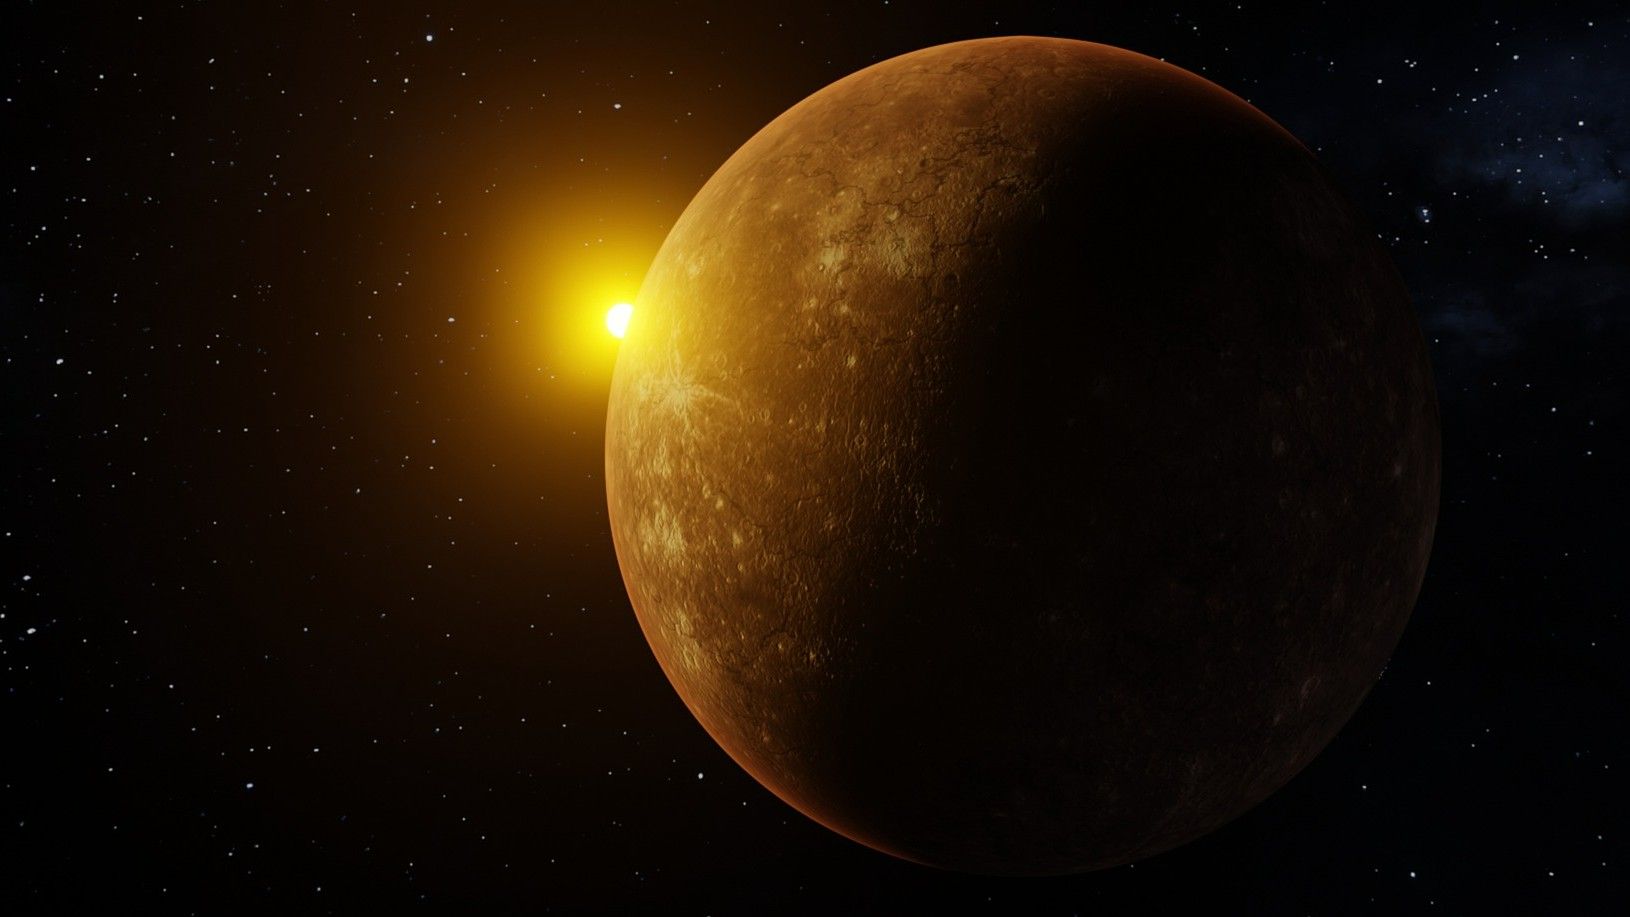 El planeta Mercurio, en primer término